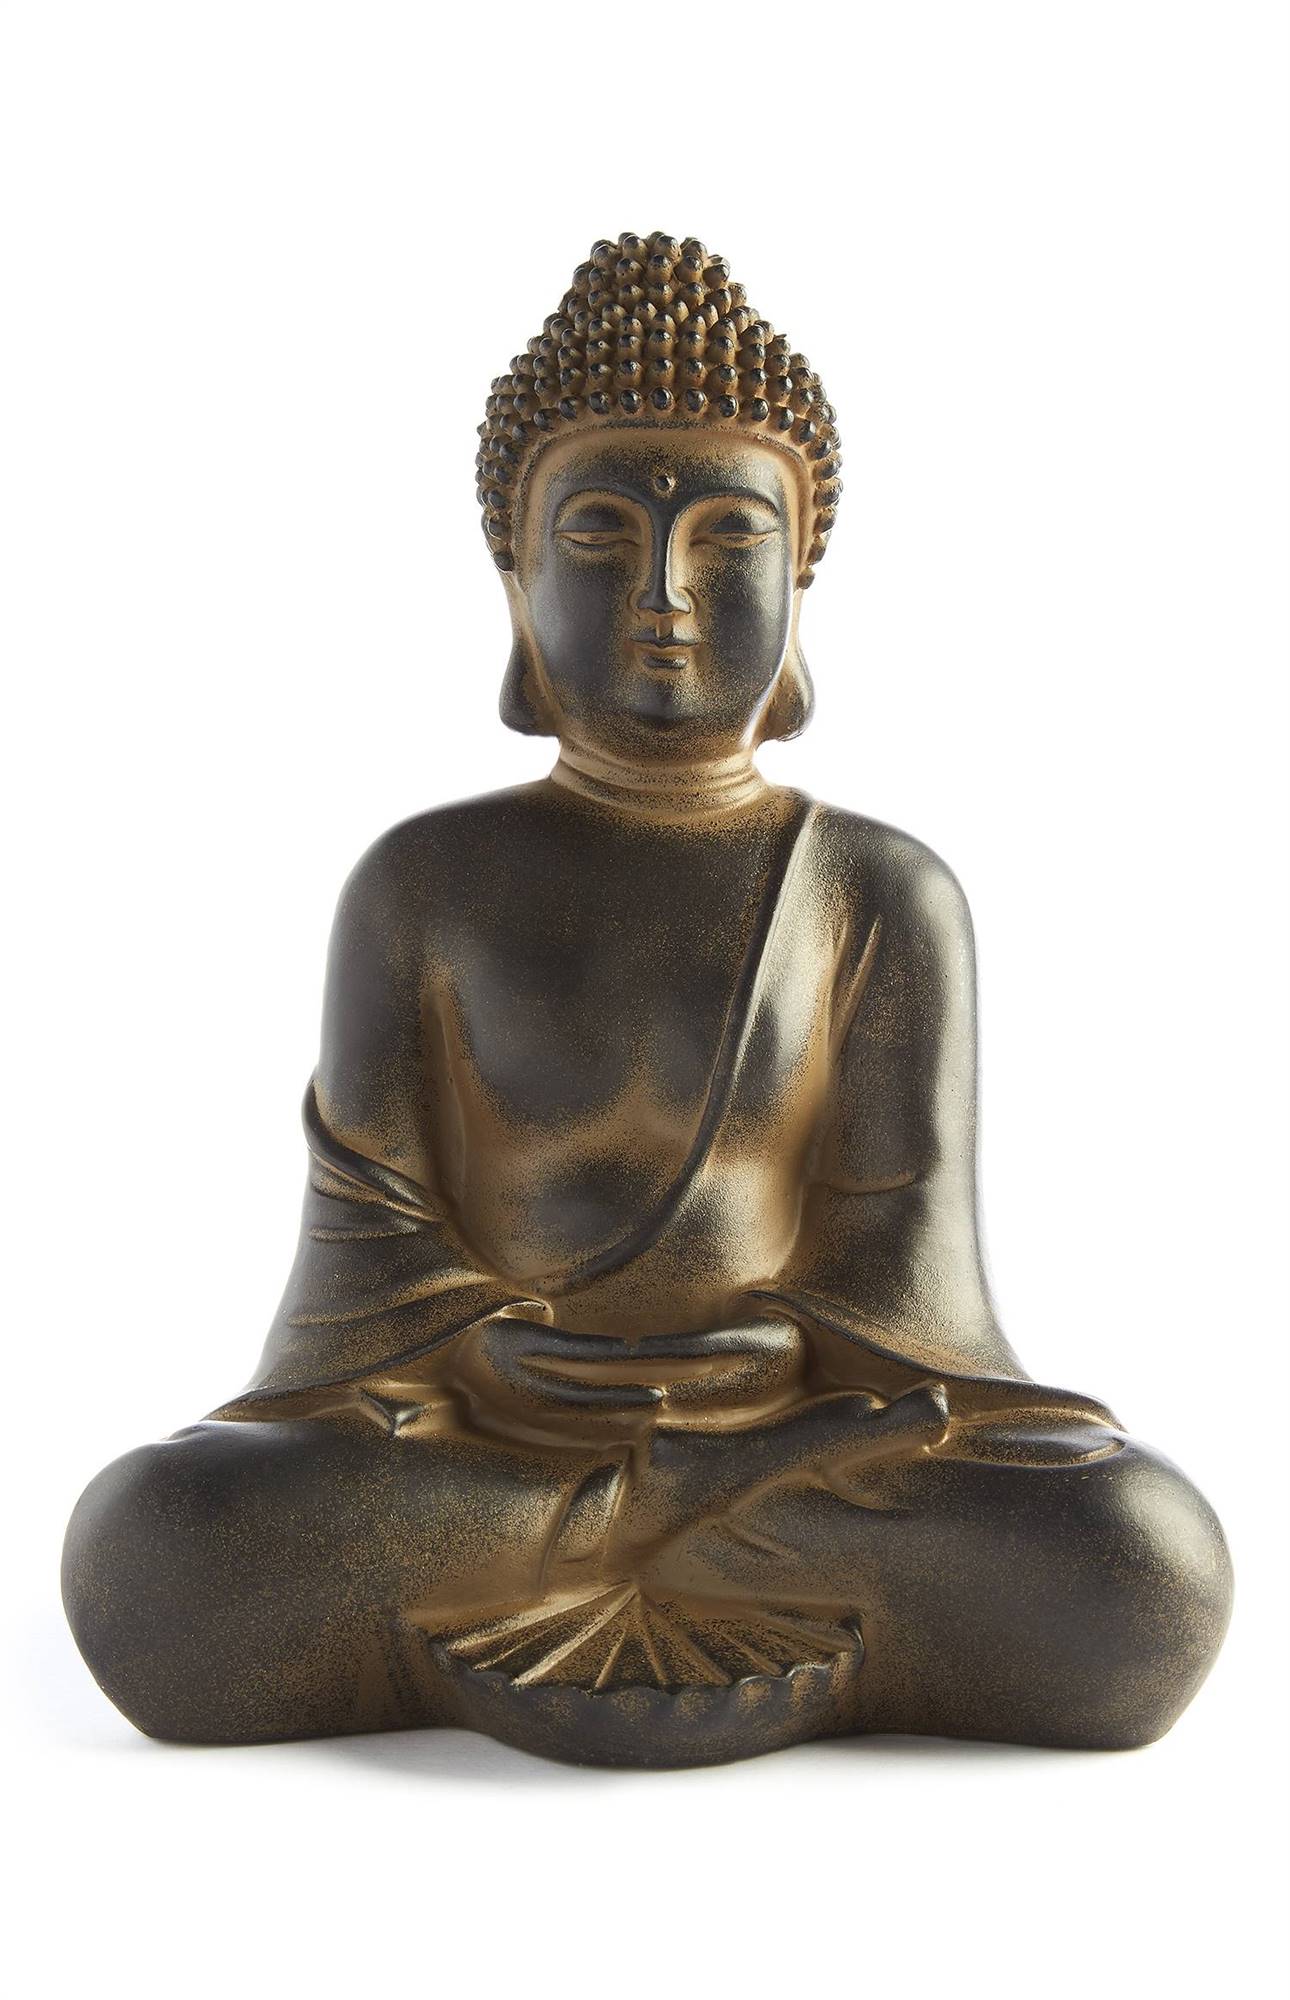 KIMBALL-9164001-01-Buddha Ornament £6 €7 primark